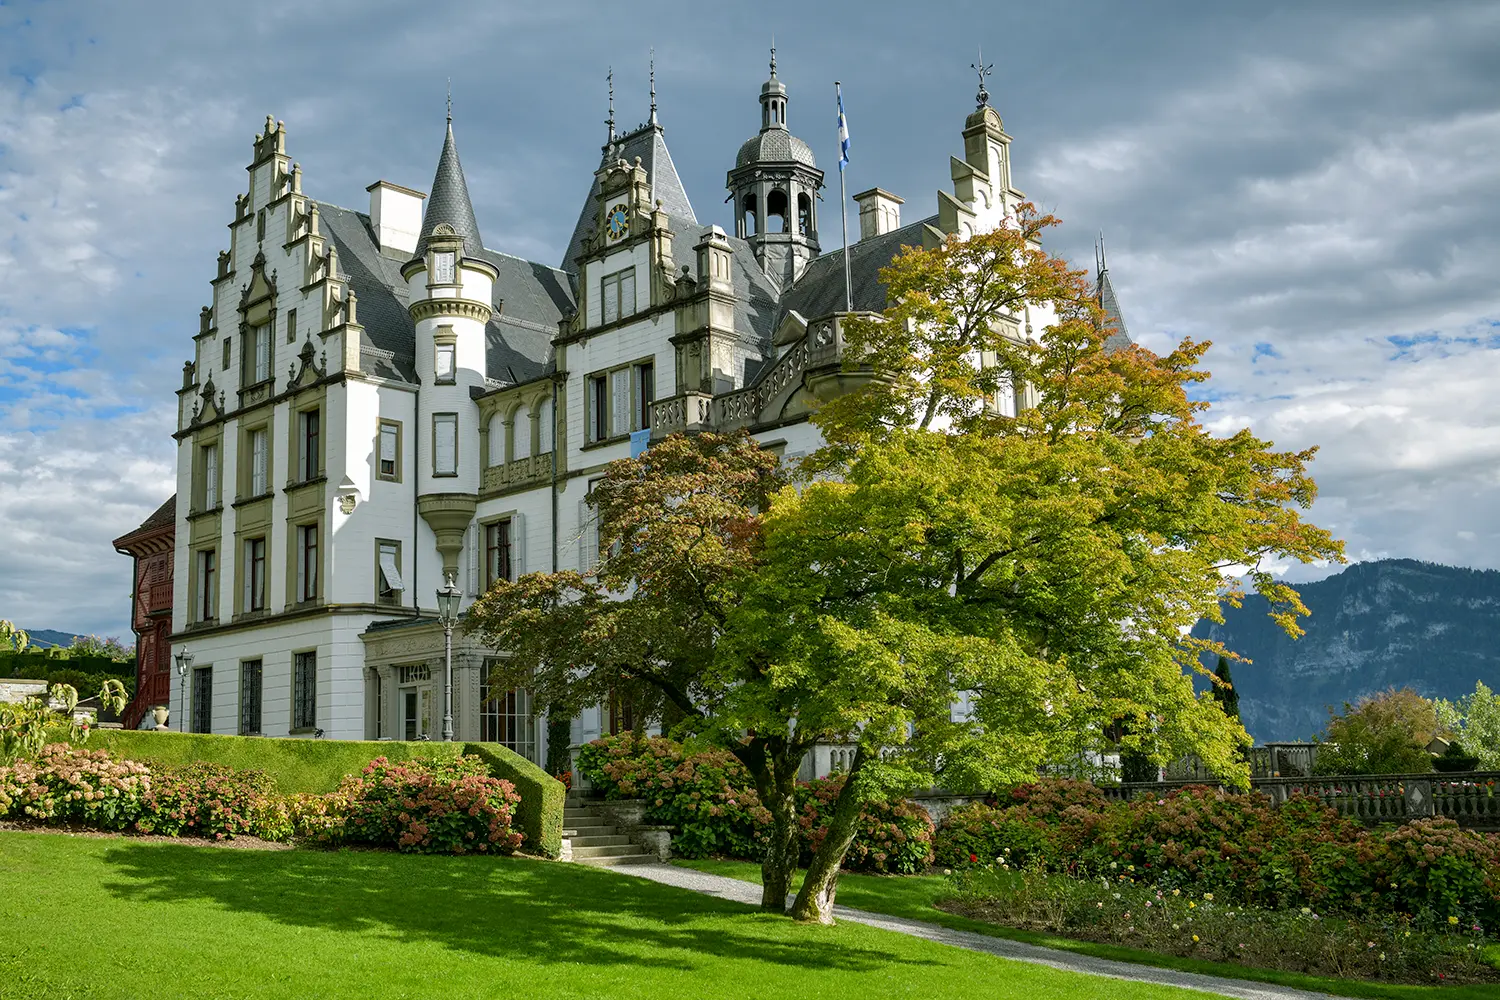 Historic Castle Meggenhorn near Meggen, Switzerland